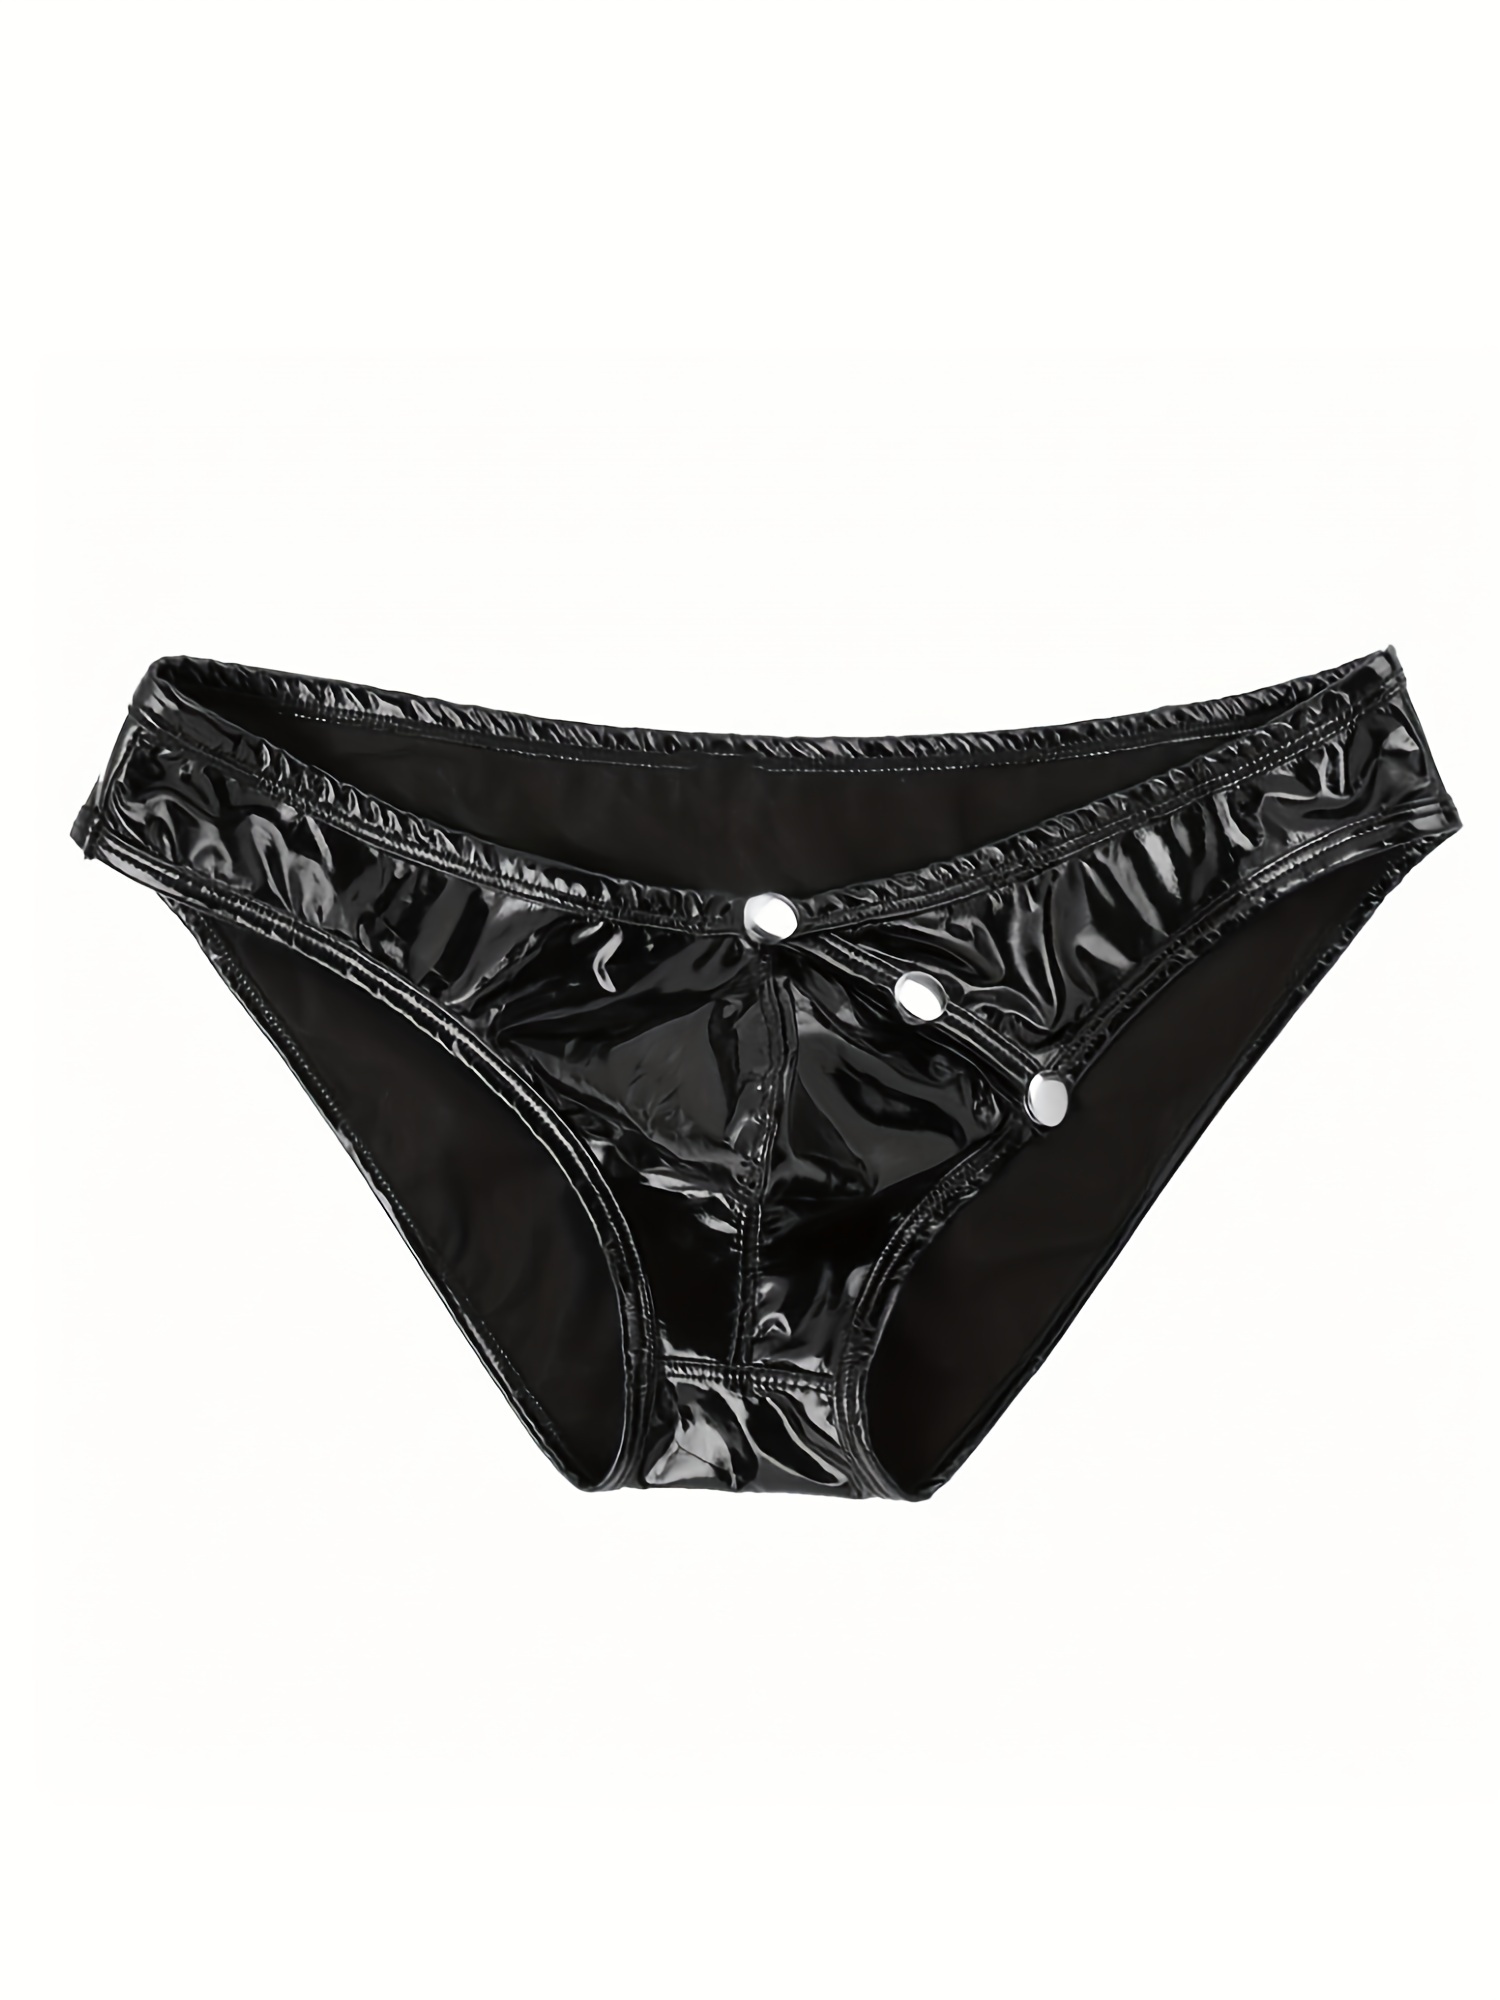 Seductive Black G String Thong Underwear Panties with Patent